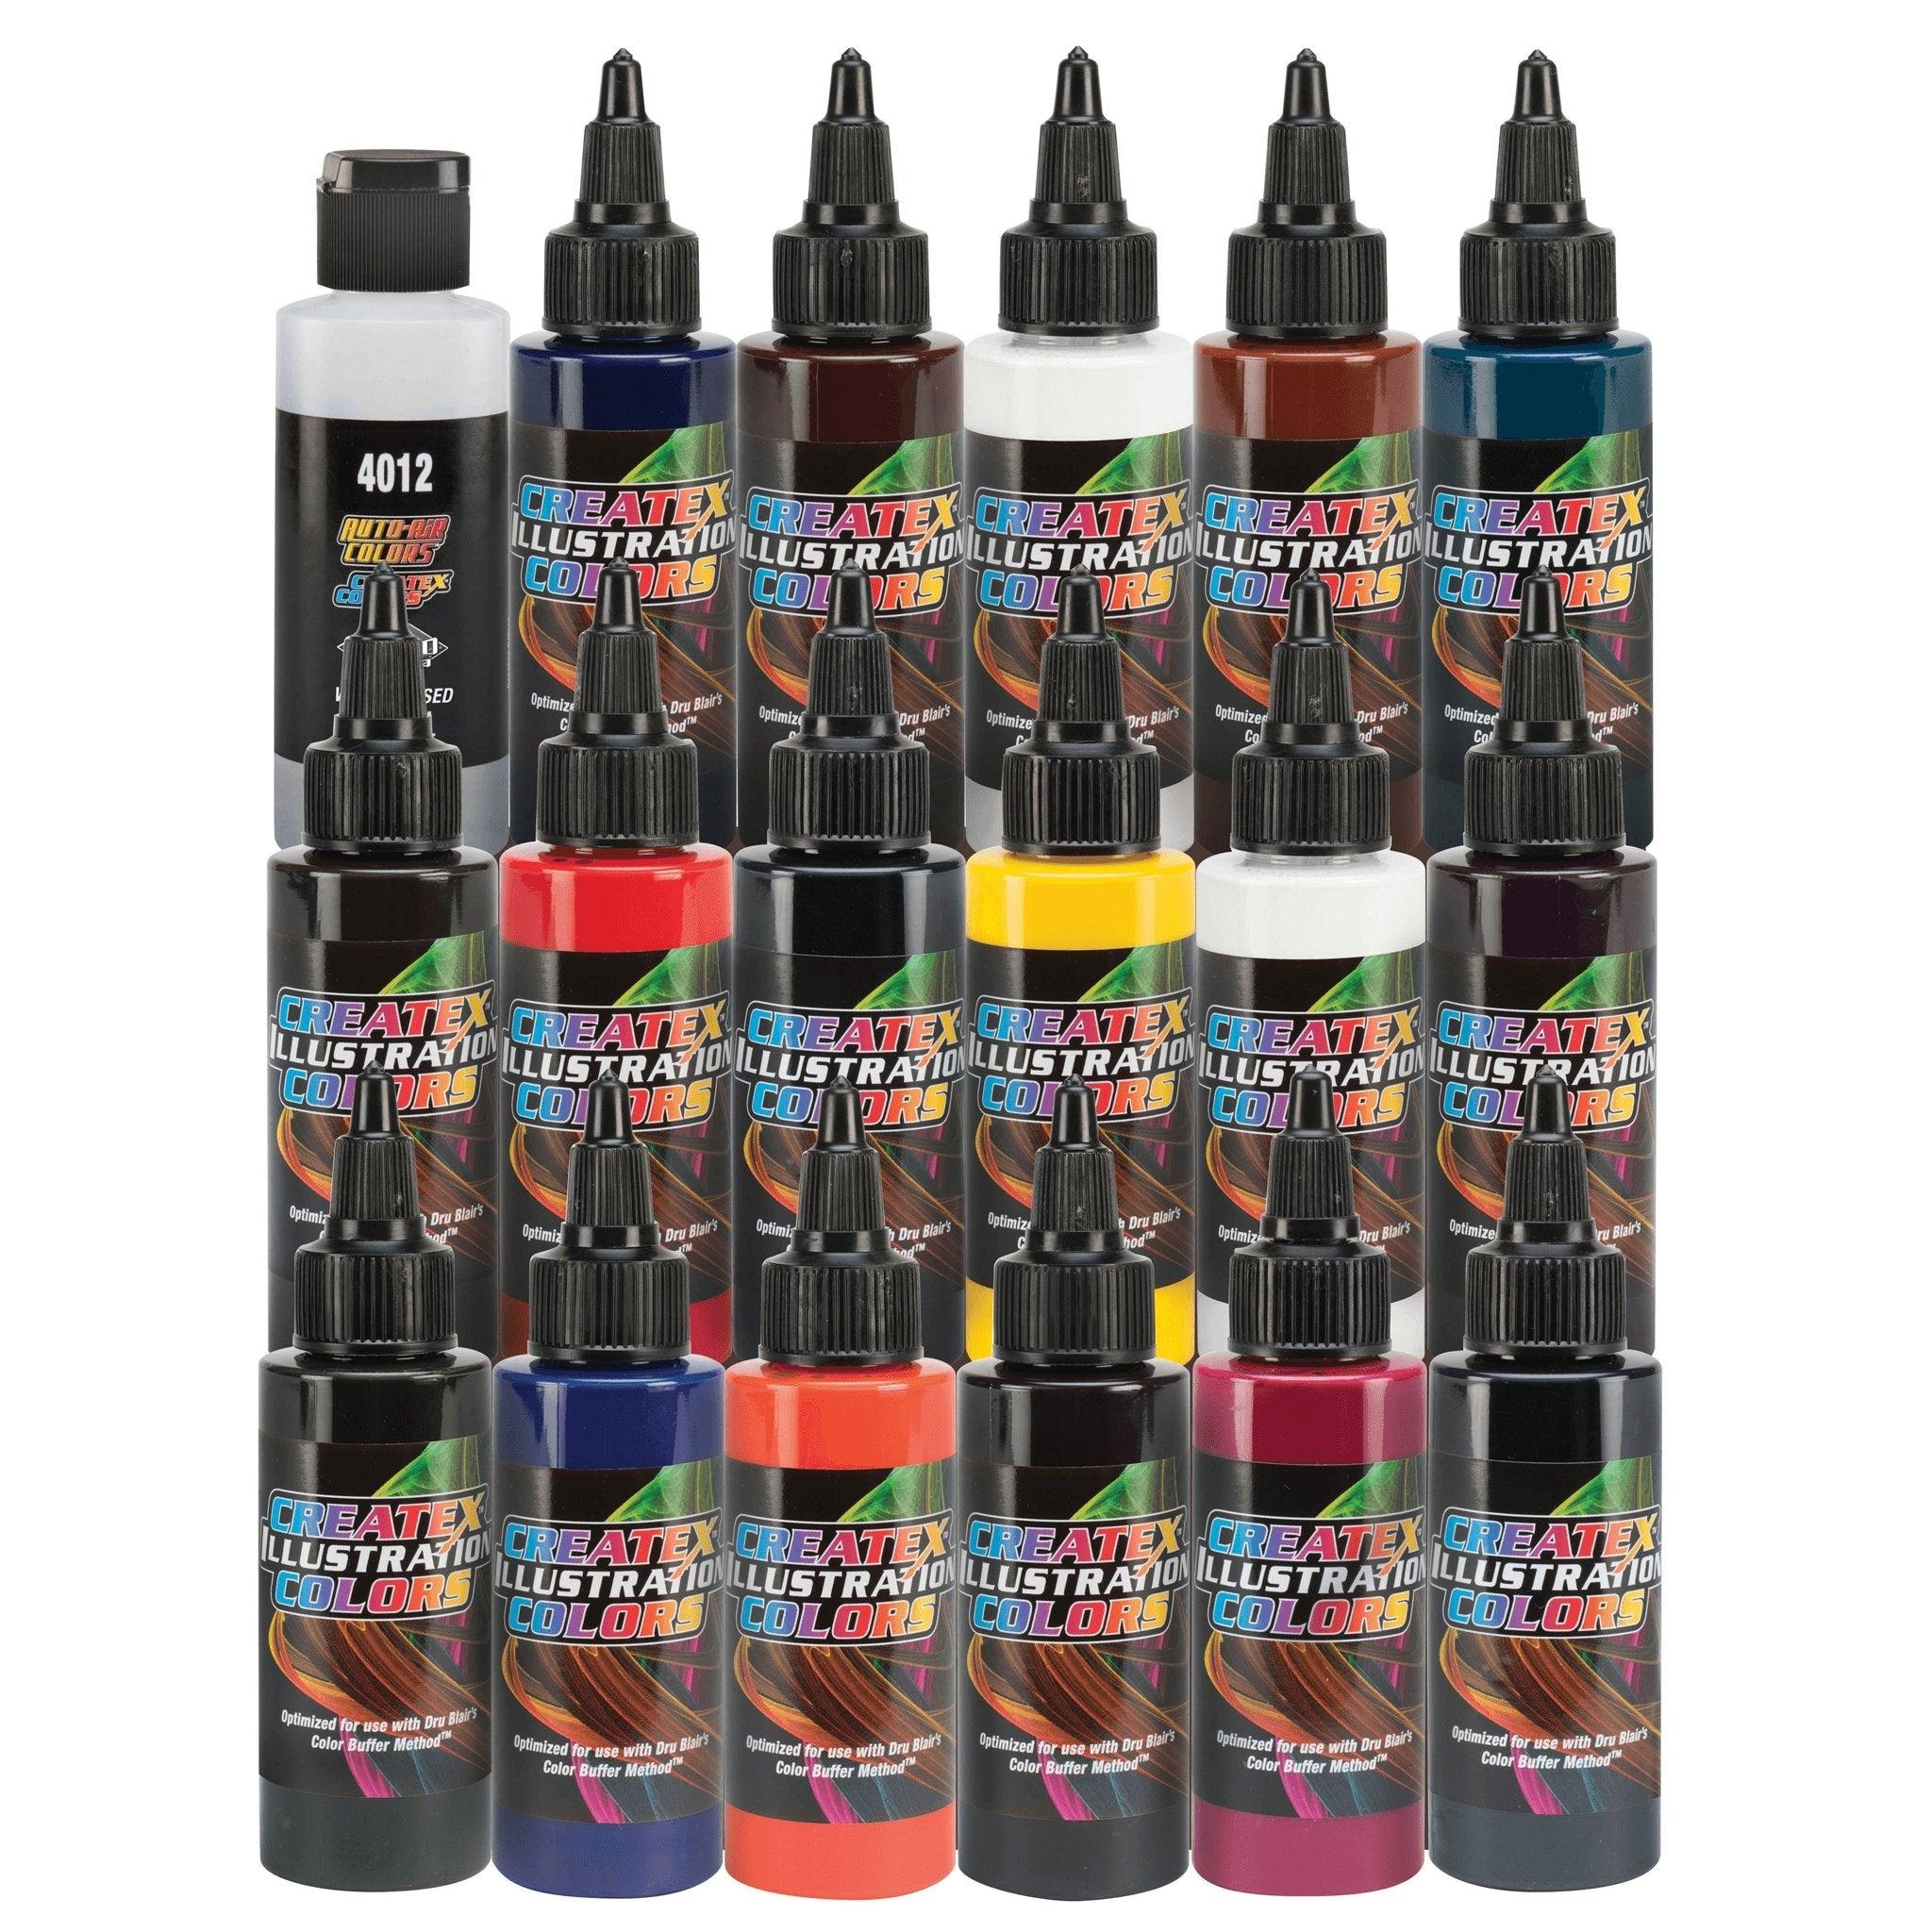 Createx Colors Paint Kits (Illustration Color Wheel) - Matuska Taxidermy Supply Company